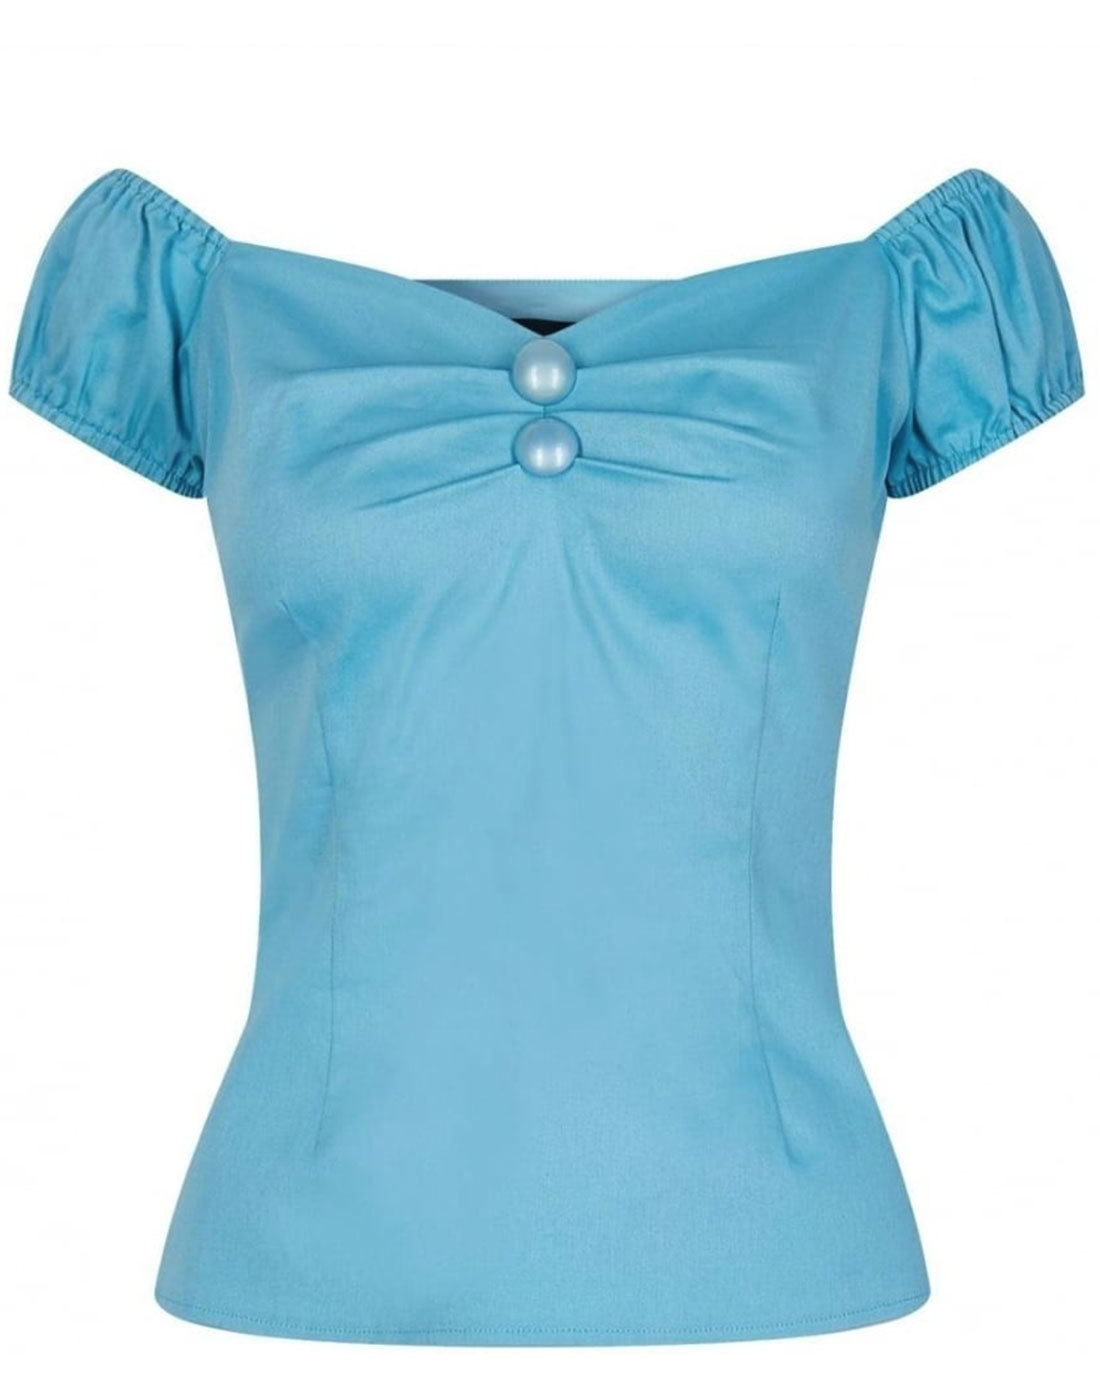 Dolores COLLECTIF 50s Vintage Plain Blue Gypsy Top